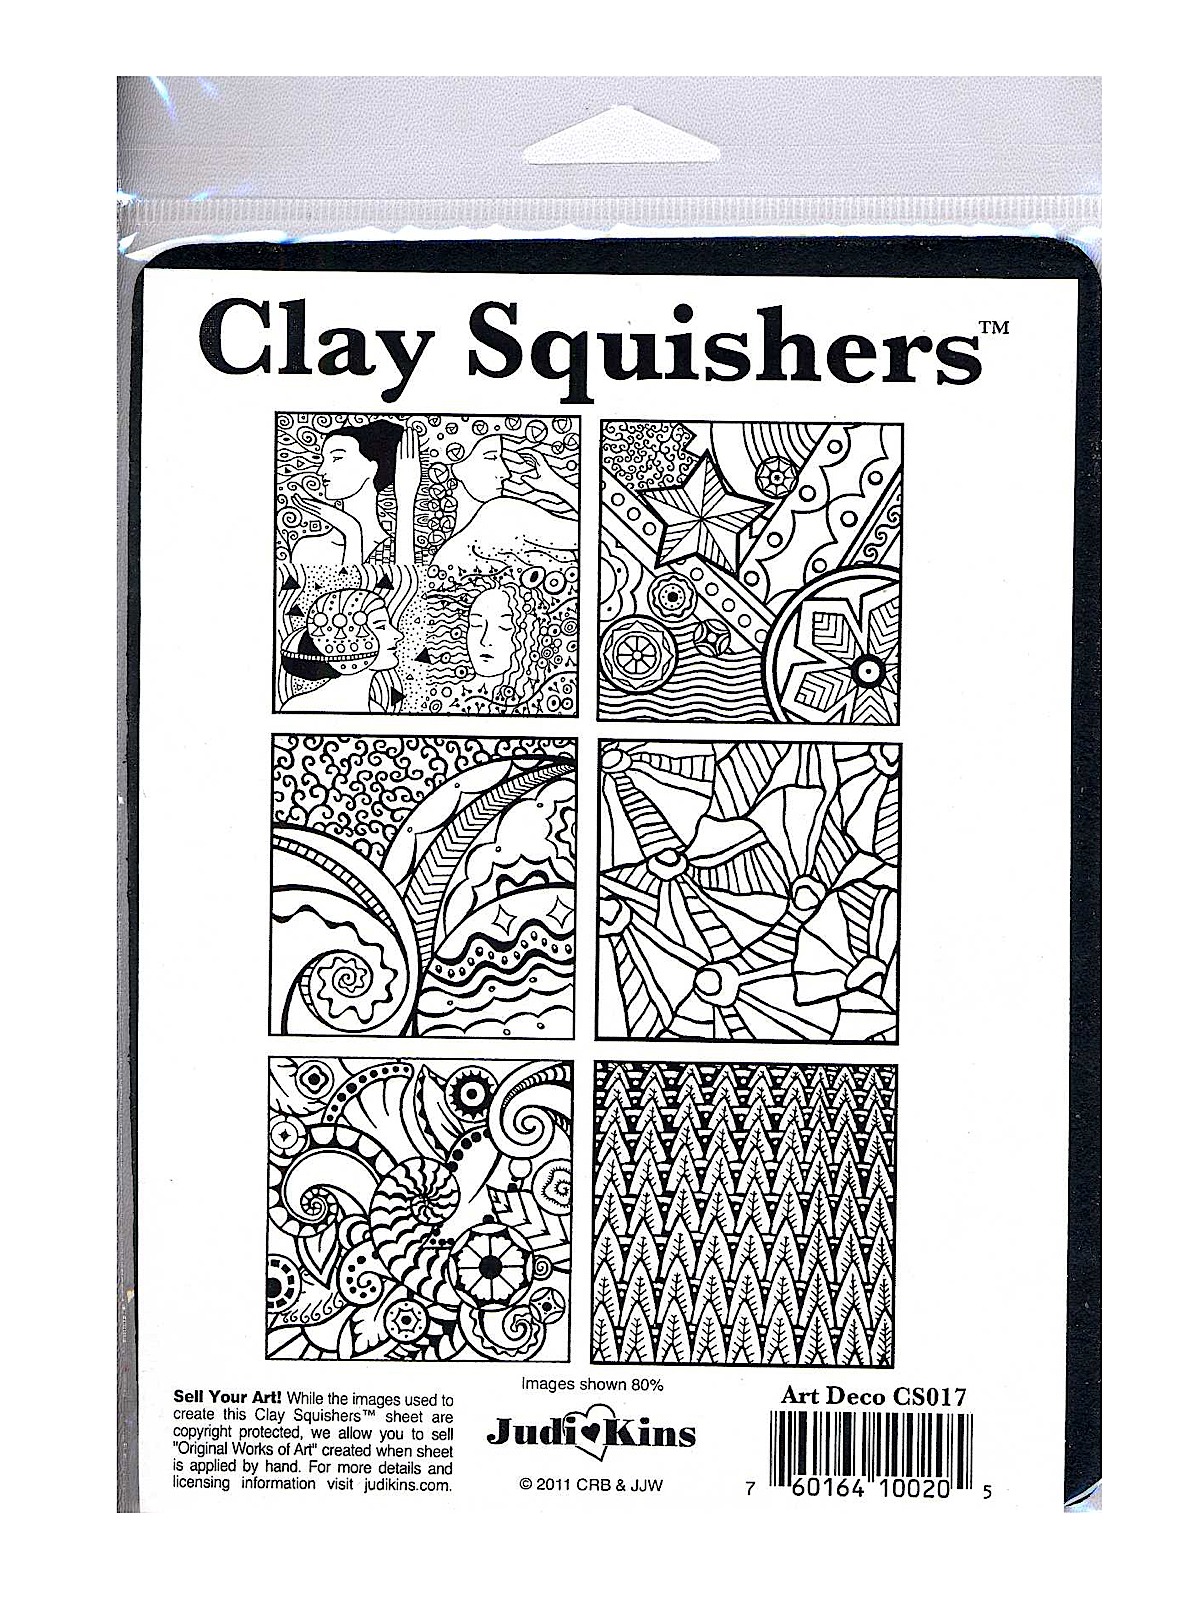 Clay Squishers Art Deco